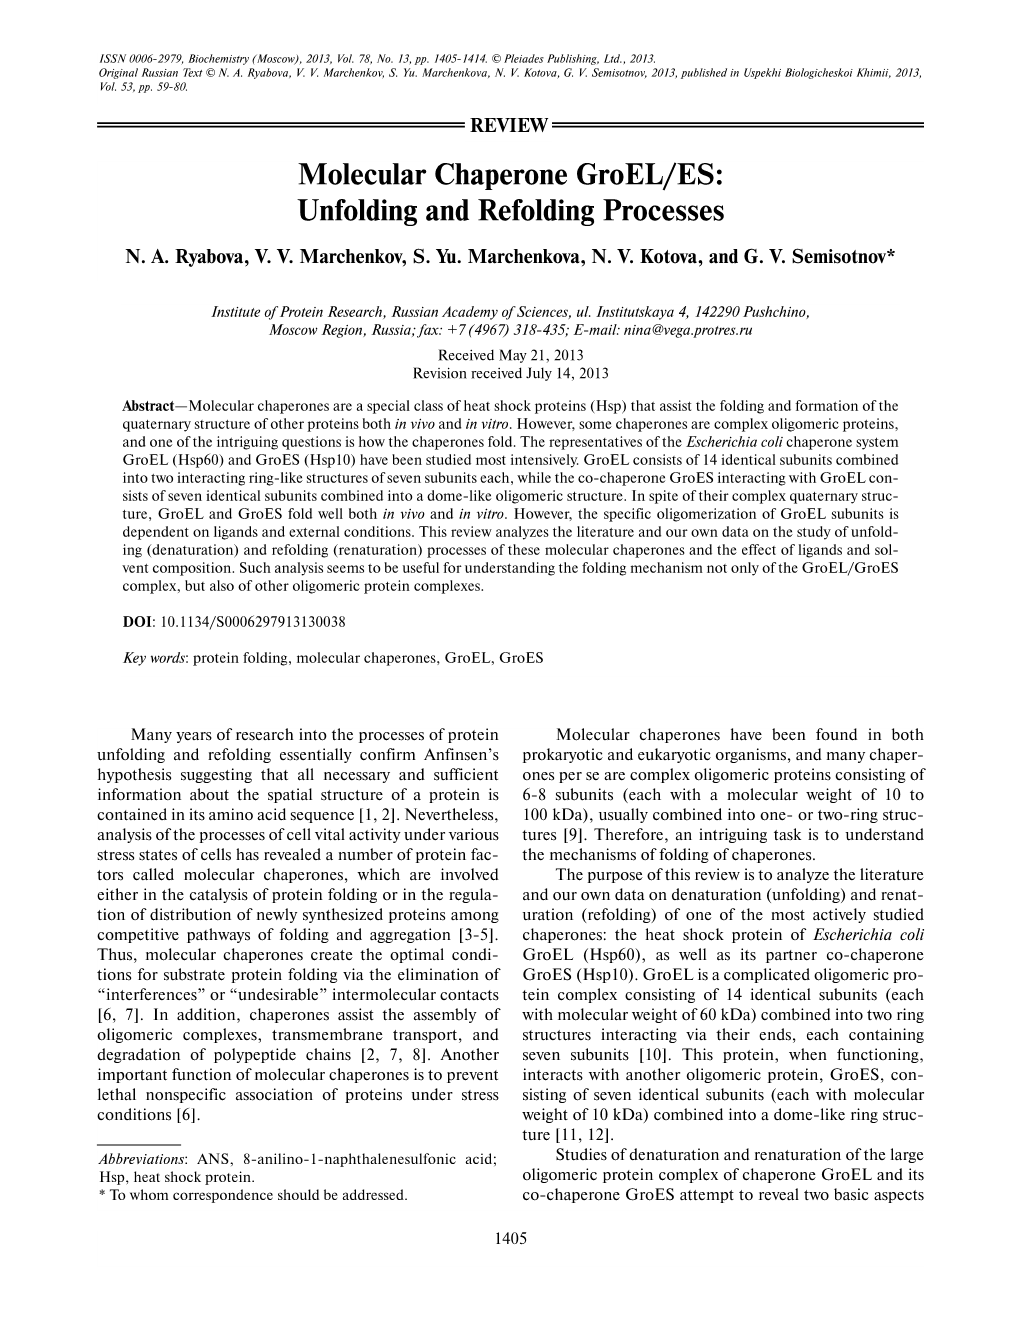 Molecular Chaperone Groel/ES: Unfolding and Refolding Processes